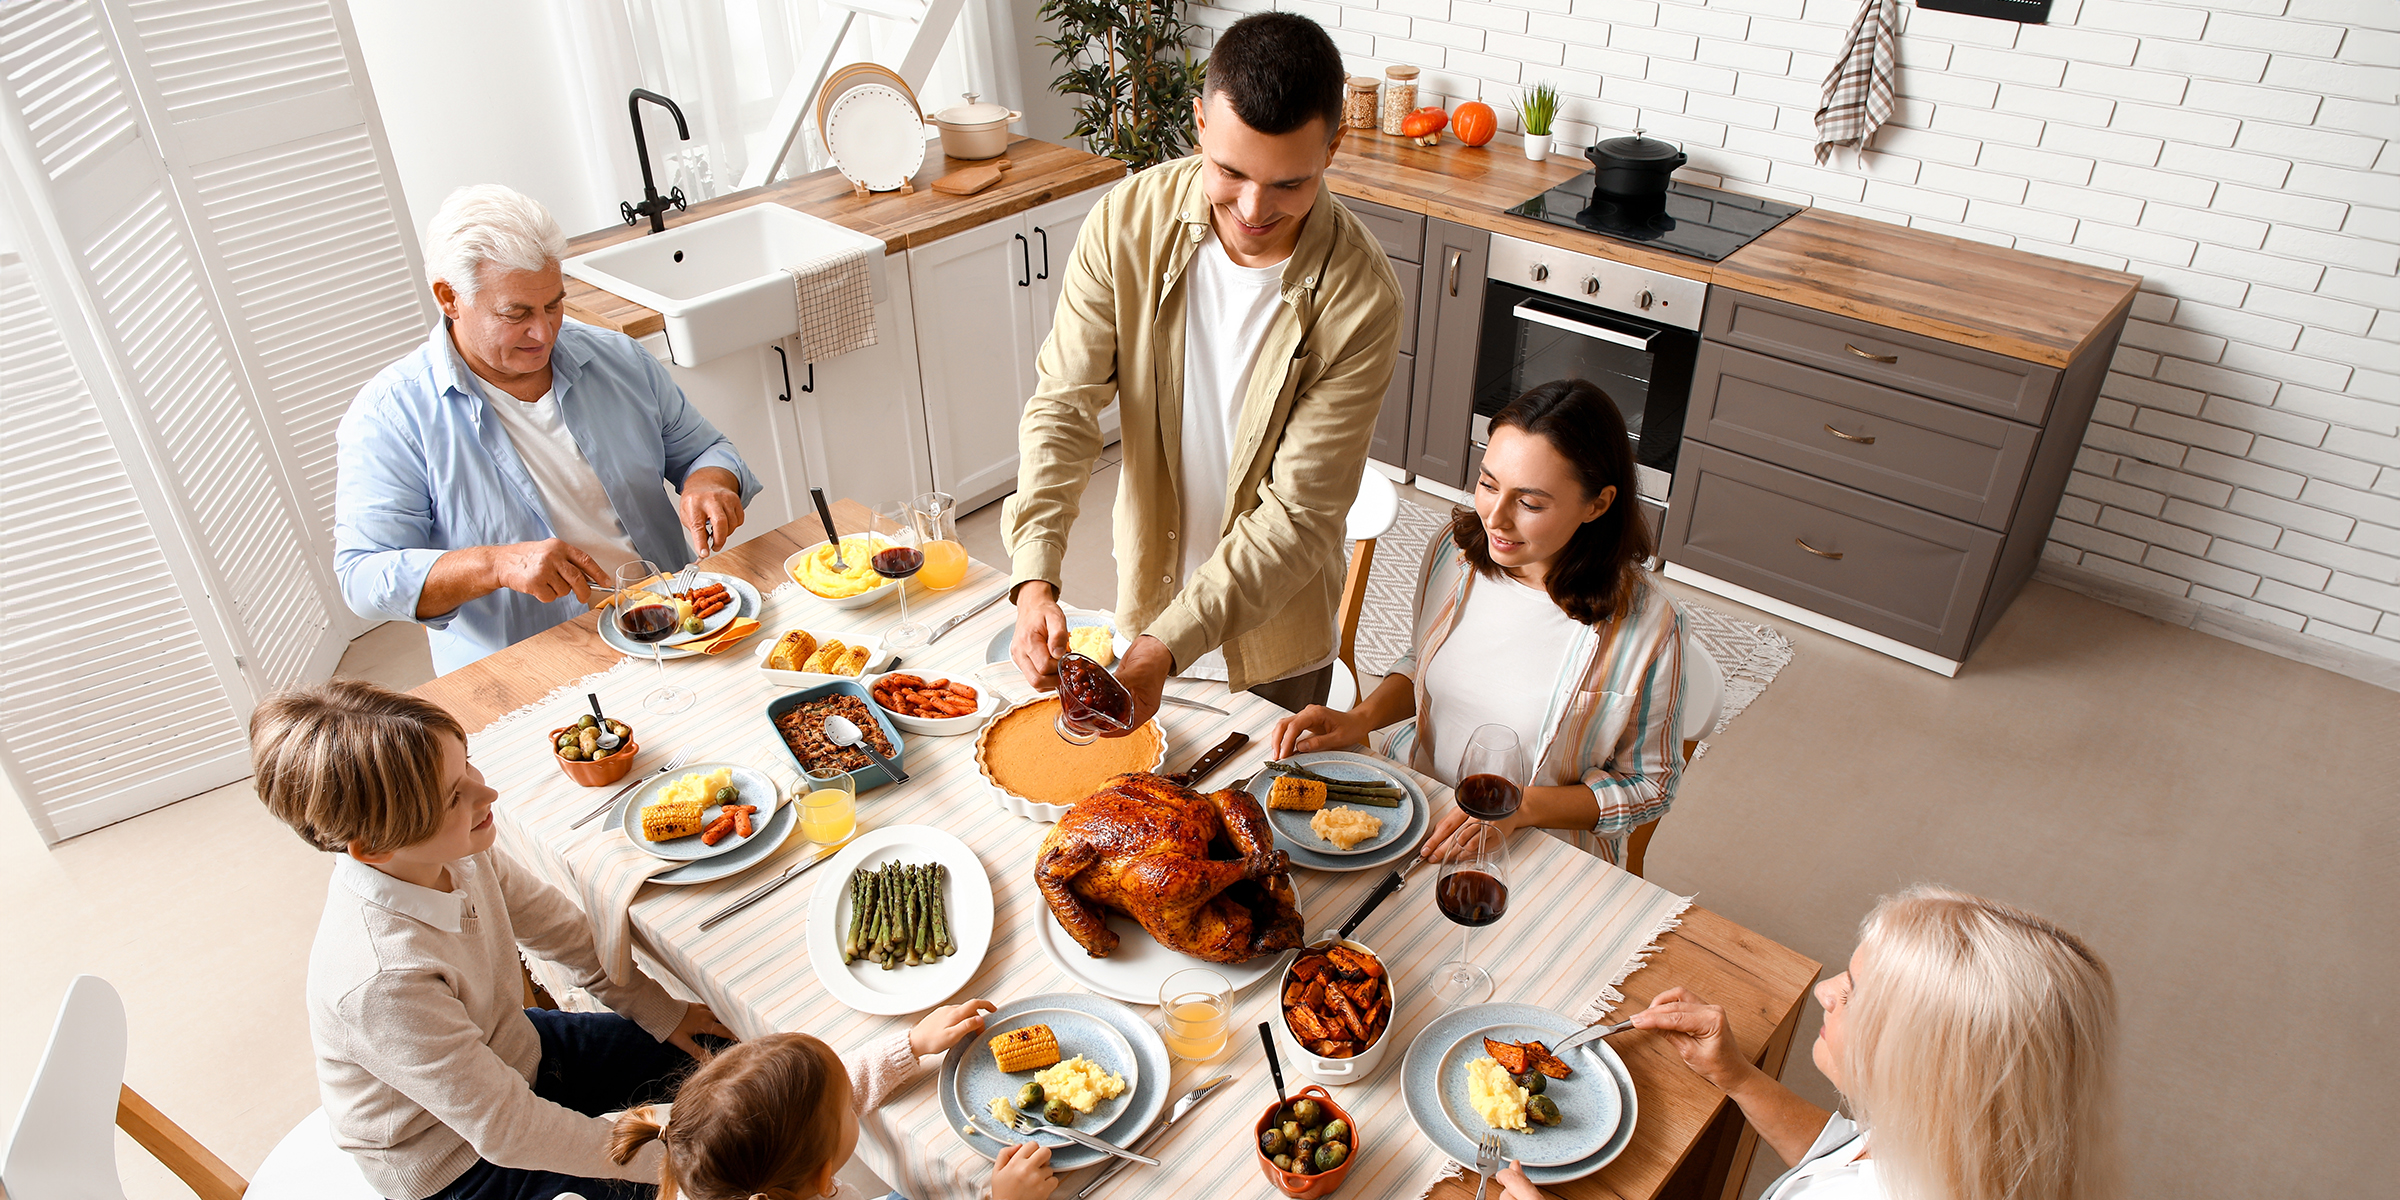 A family dinner | Source: Shutterstock